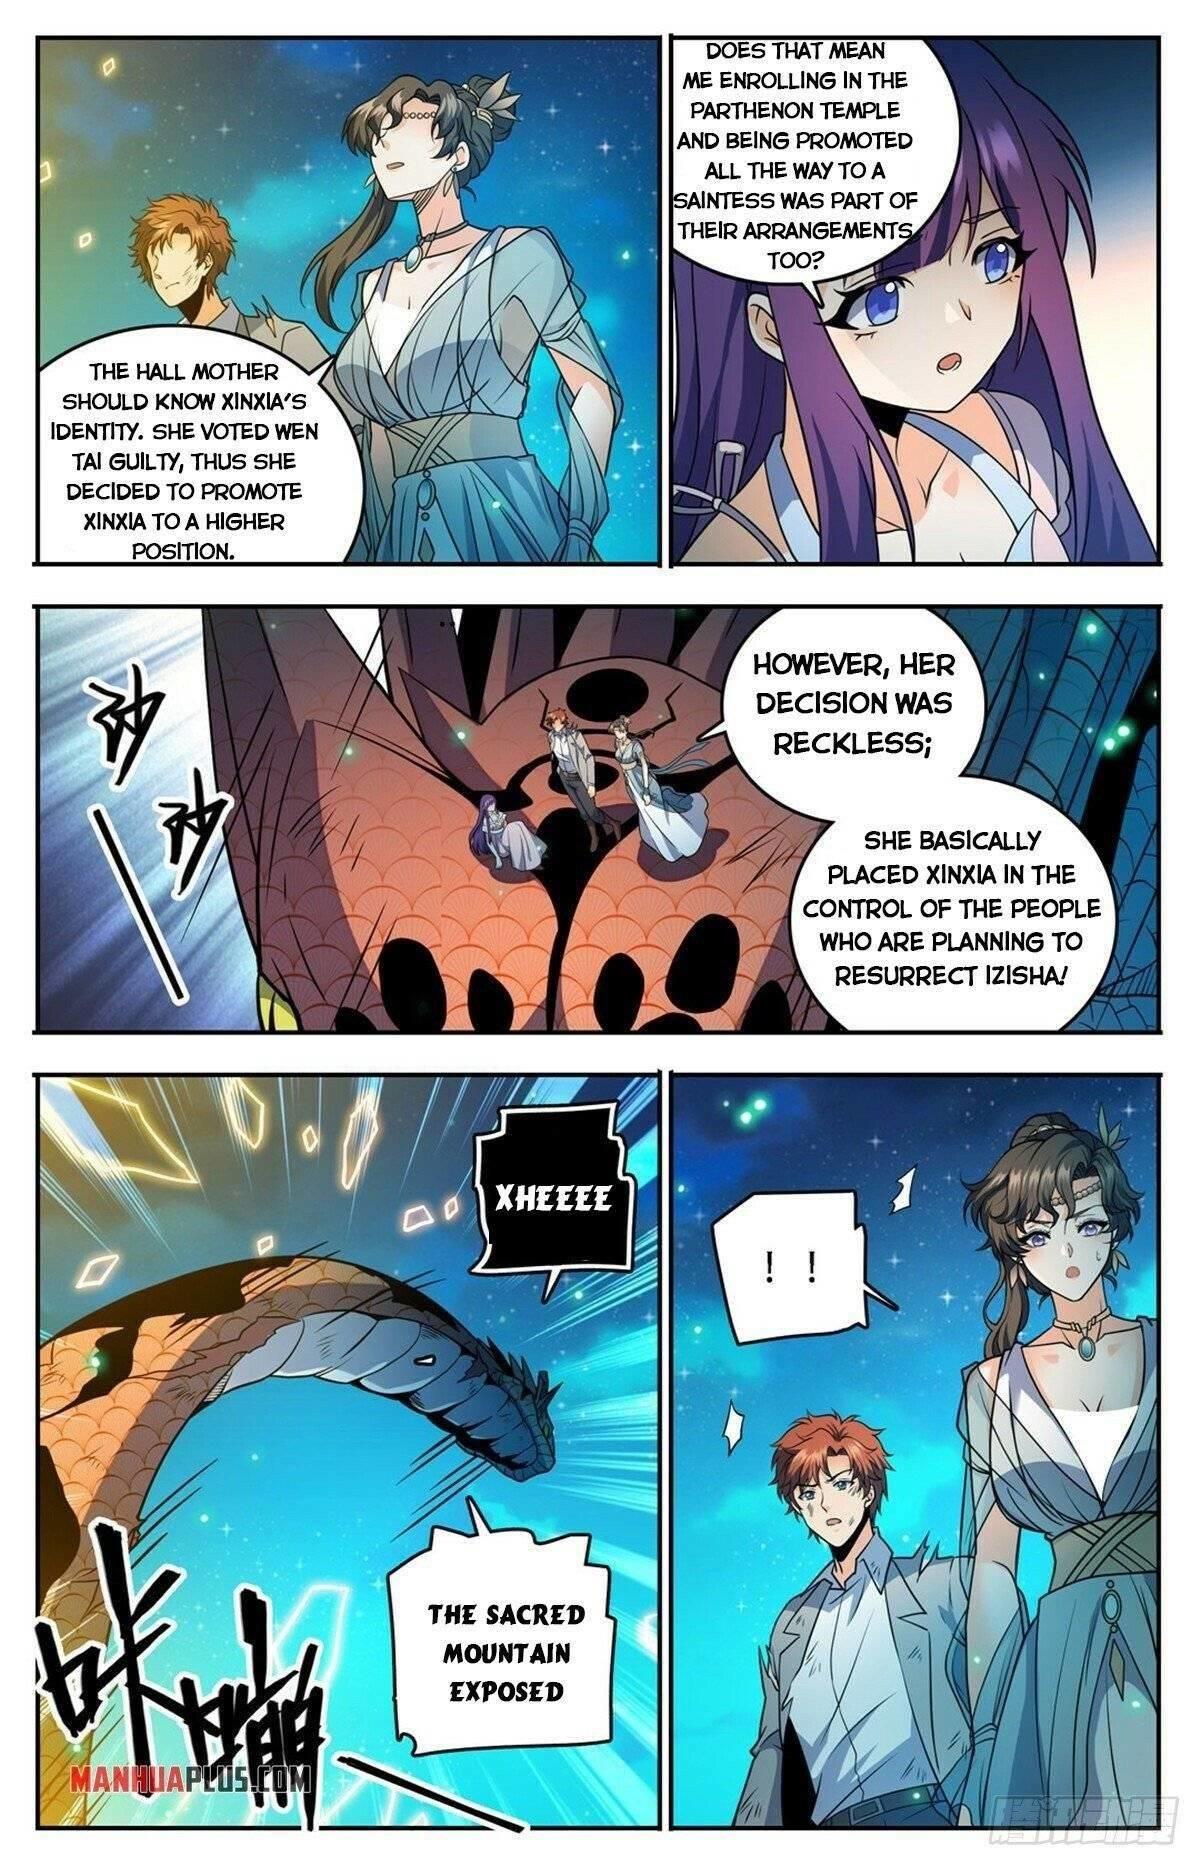 Versatile Mage Chapter 756 page 9 - Mangakakalot